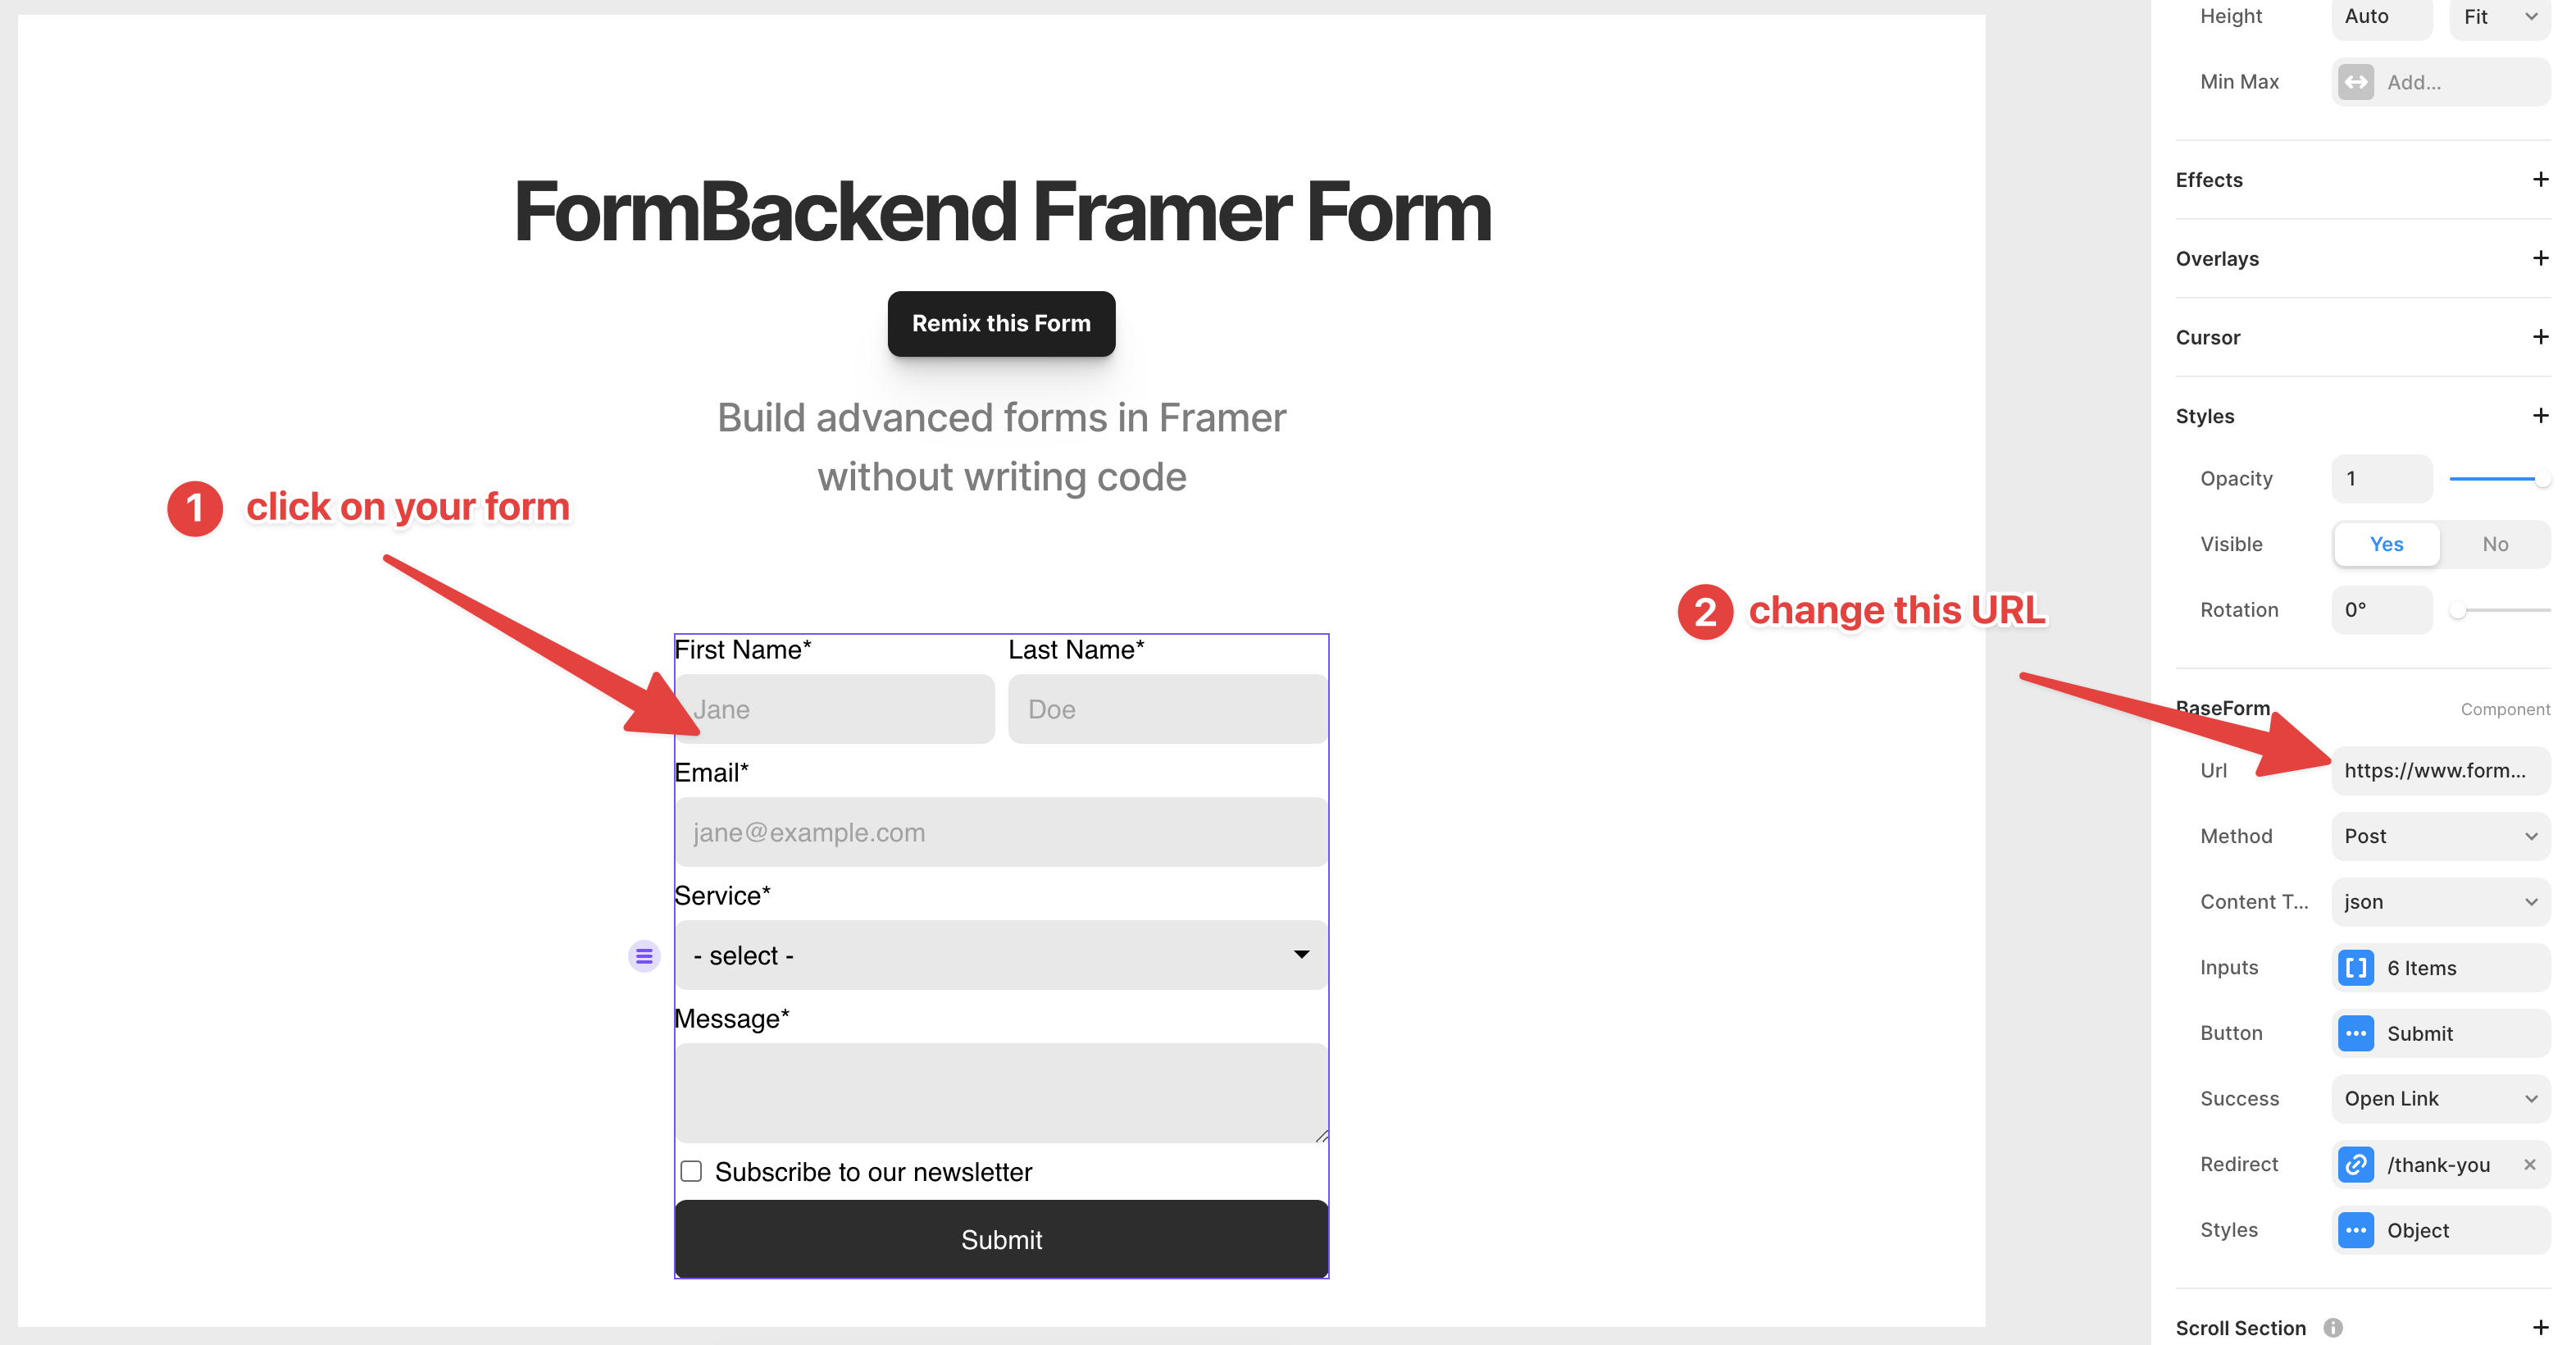 Change URL for the BaseForm